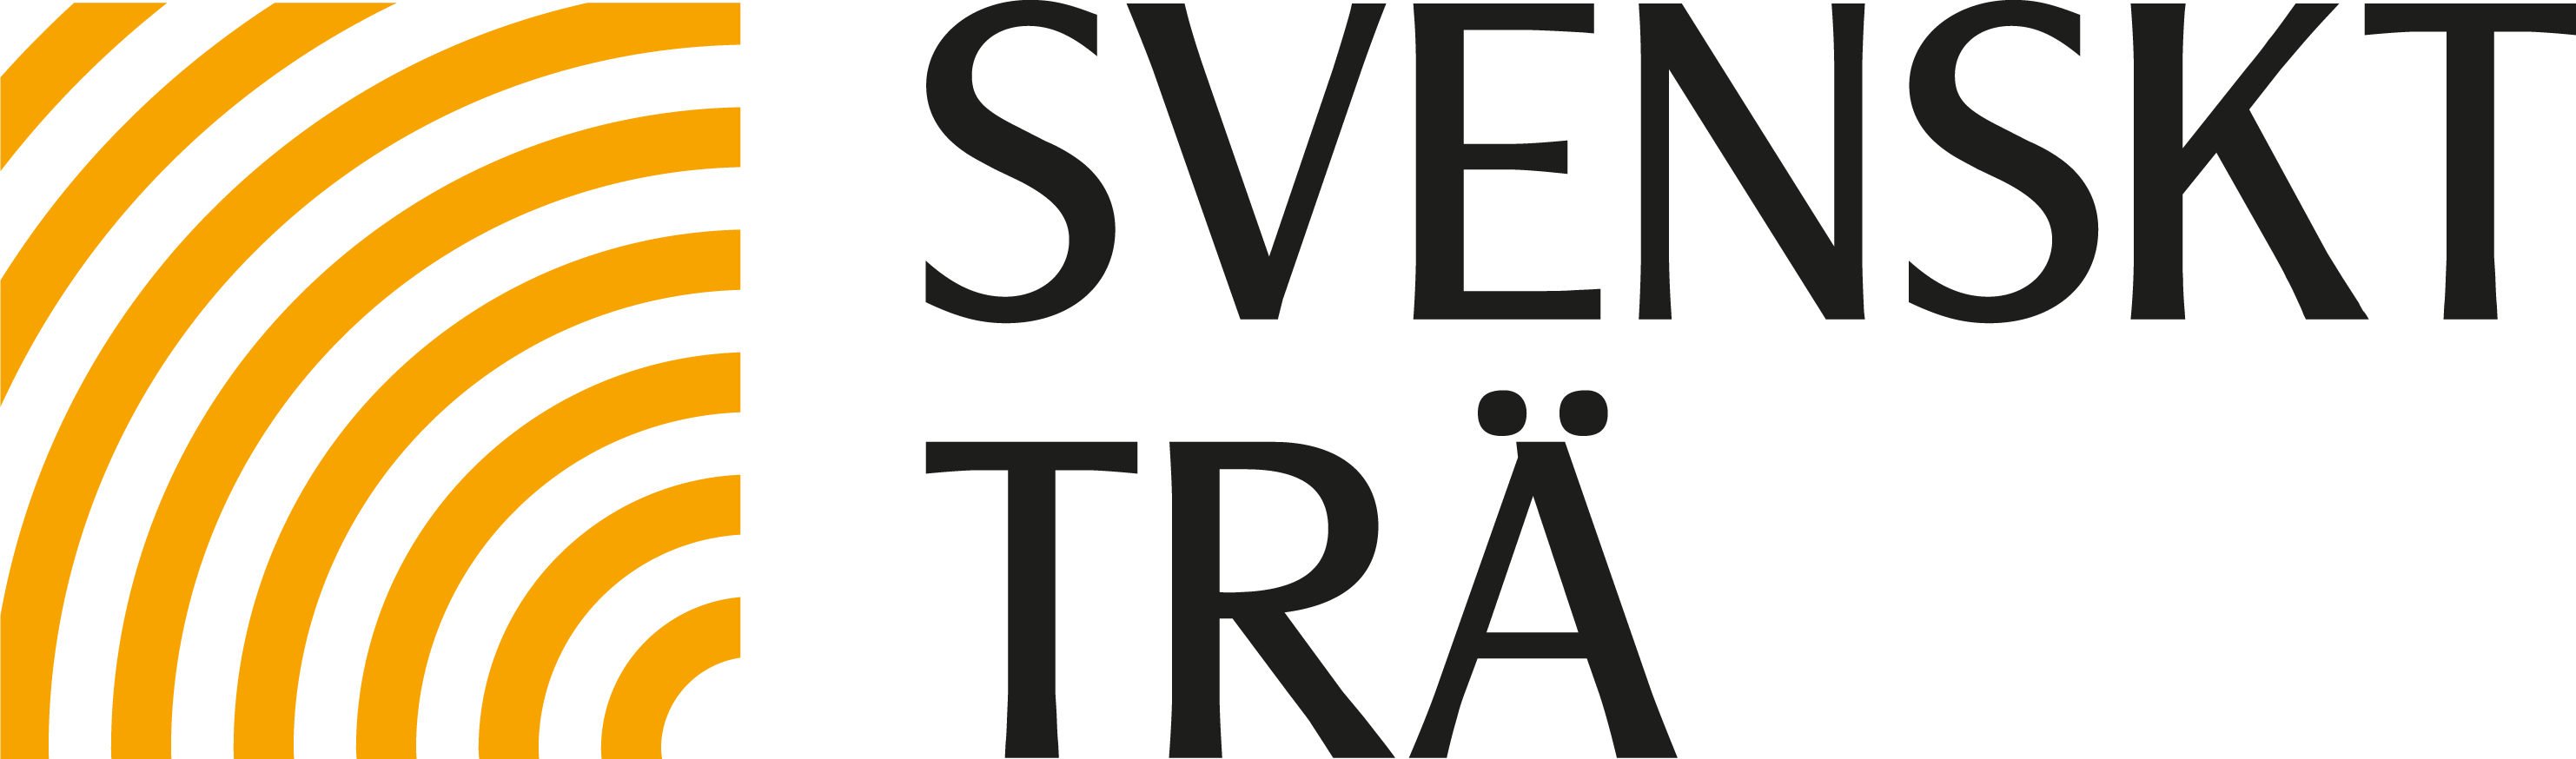 Svenskt_Tra_logotyp_orange_svart_text.png